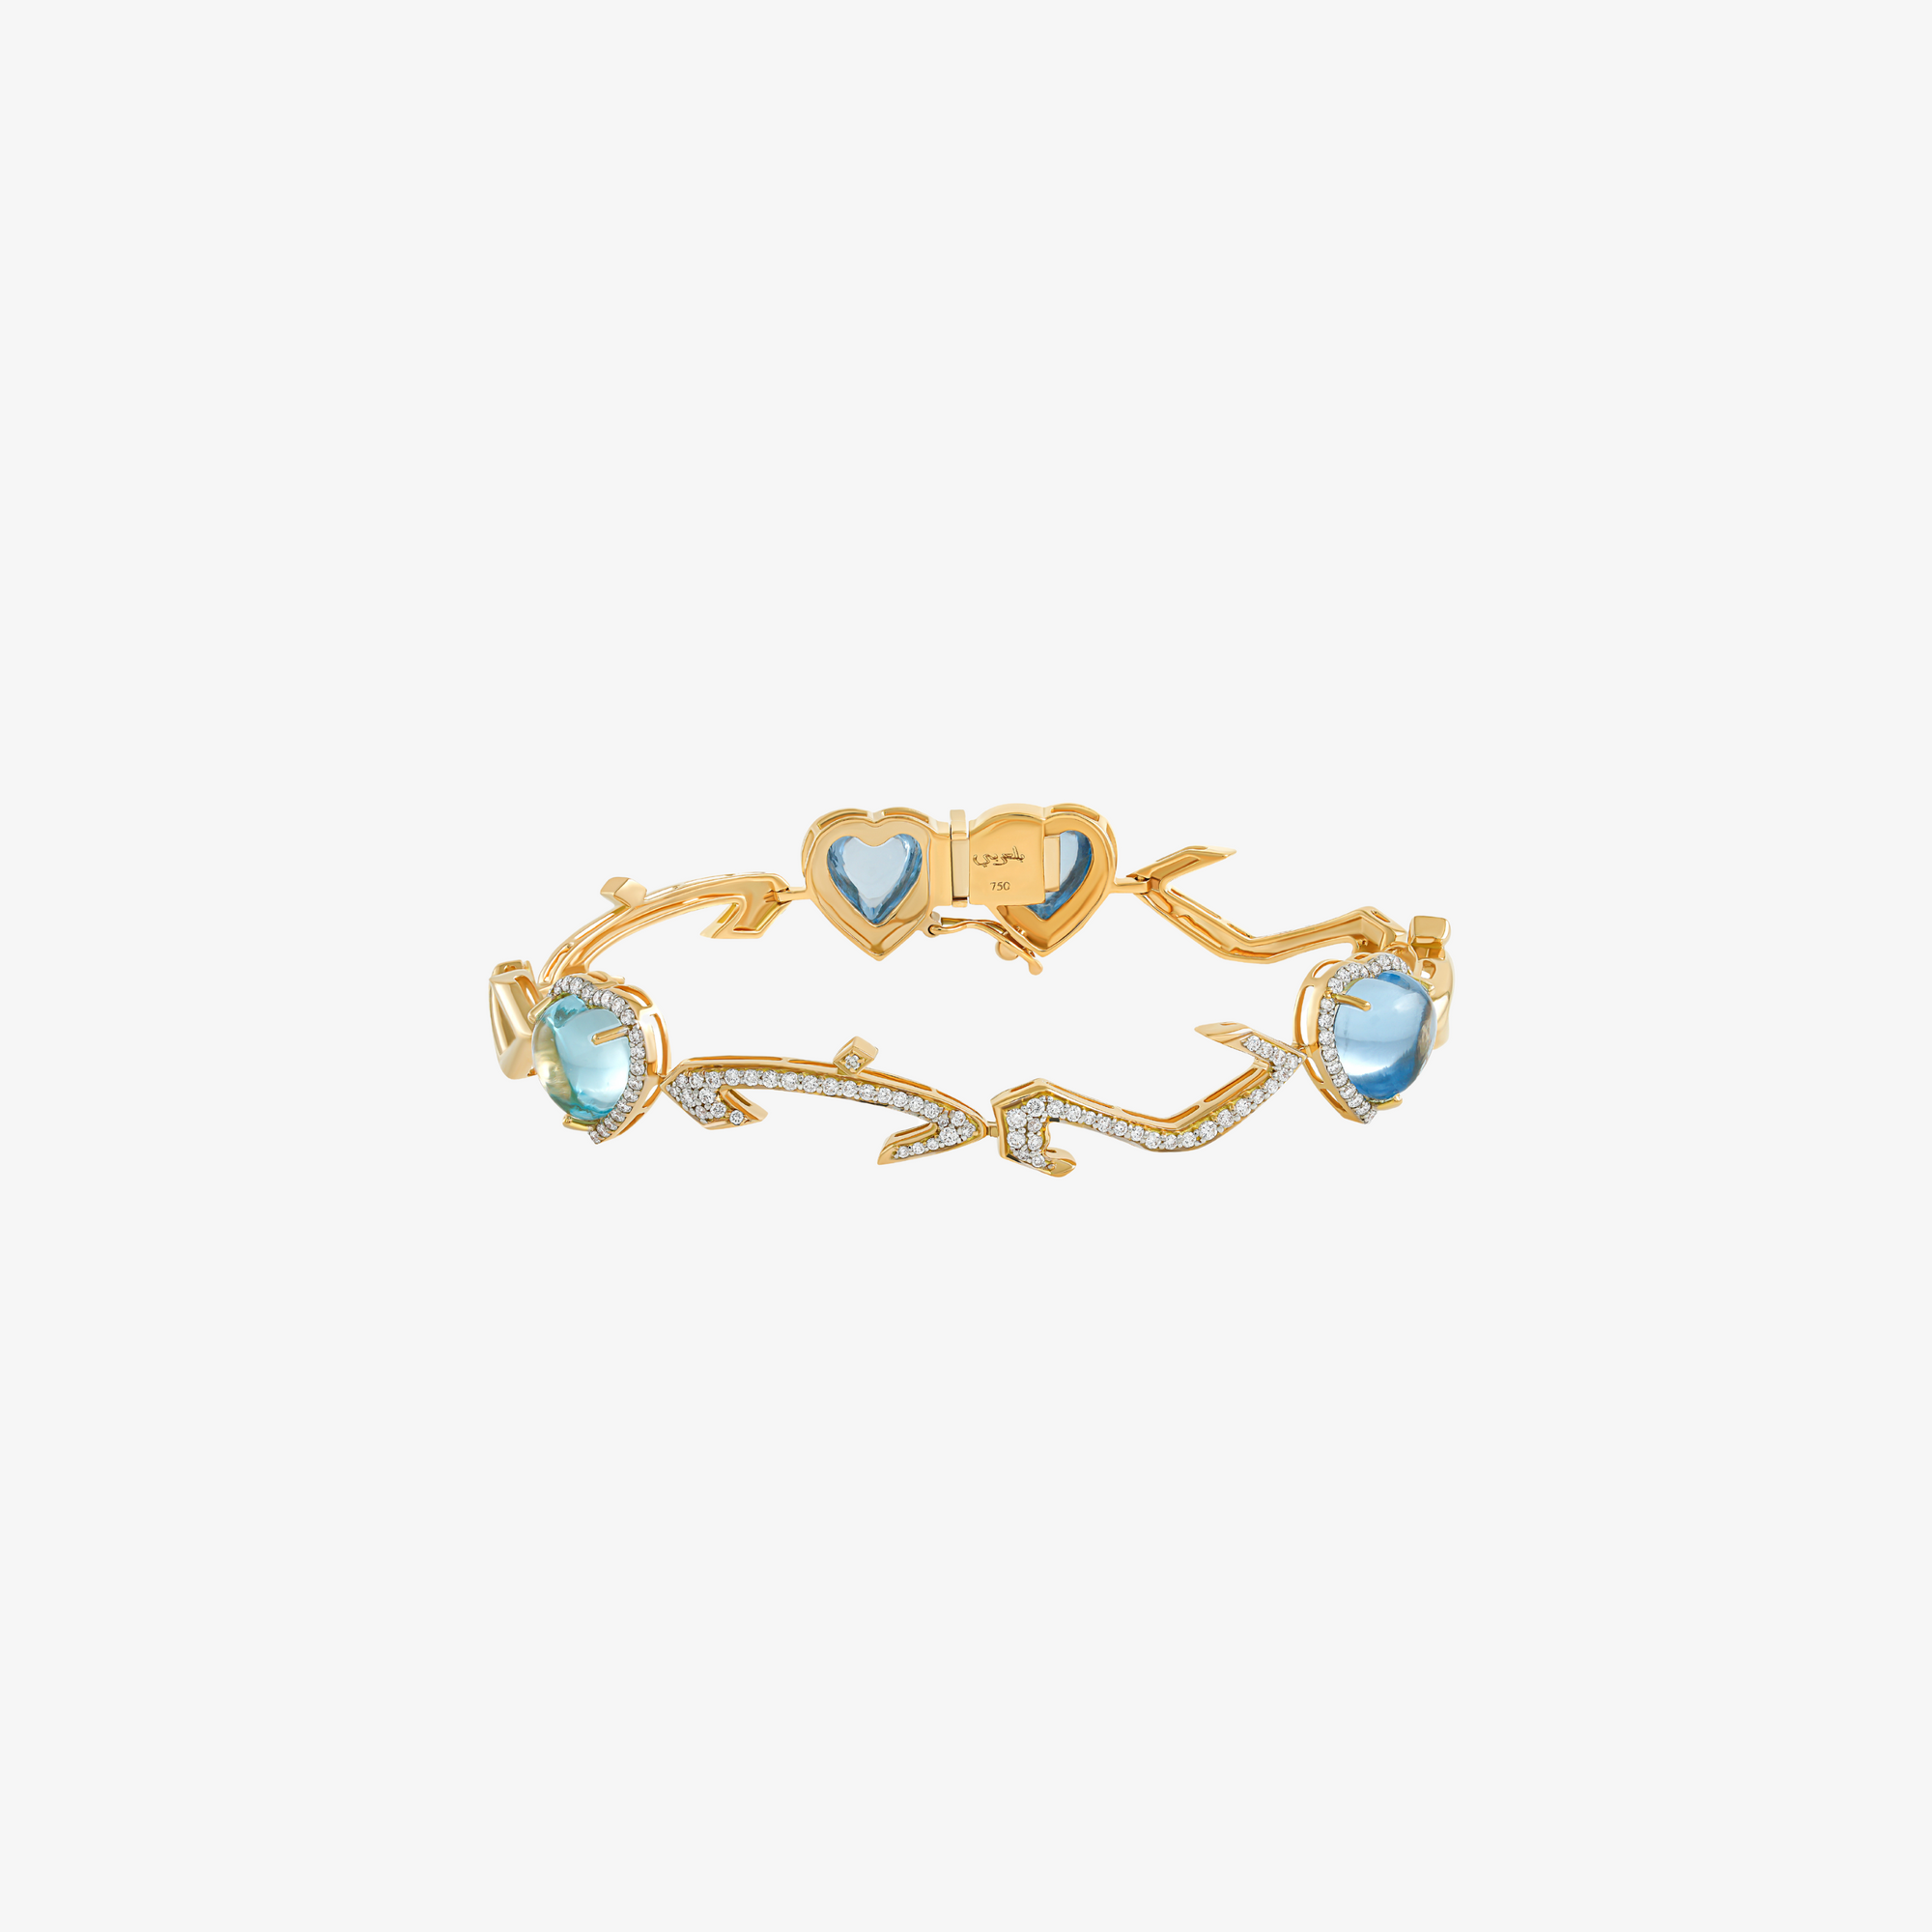 TAIM - 18K Gold, Diamond & Blue Topaz "Love" Bracelet